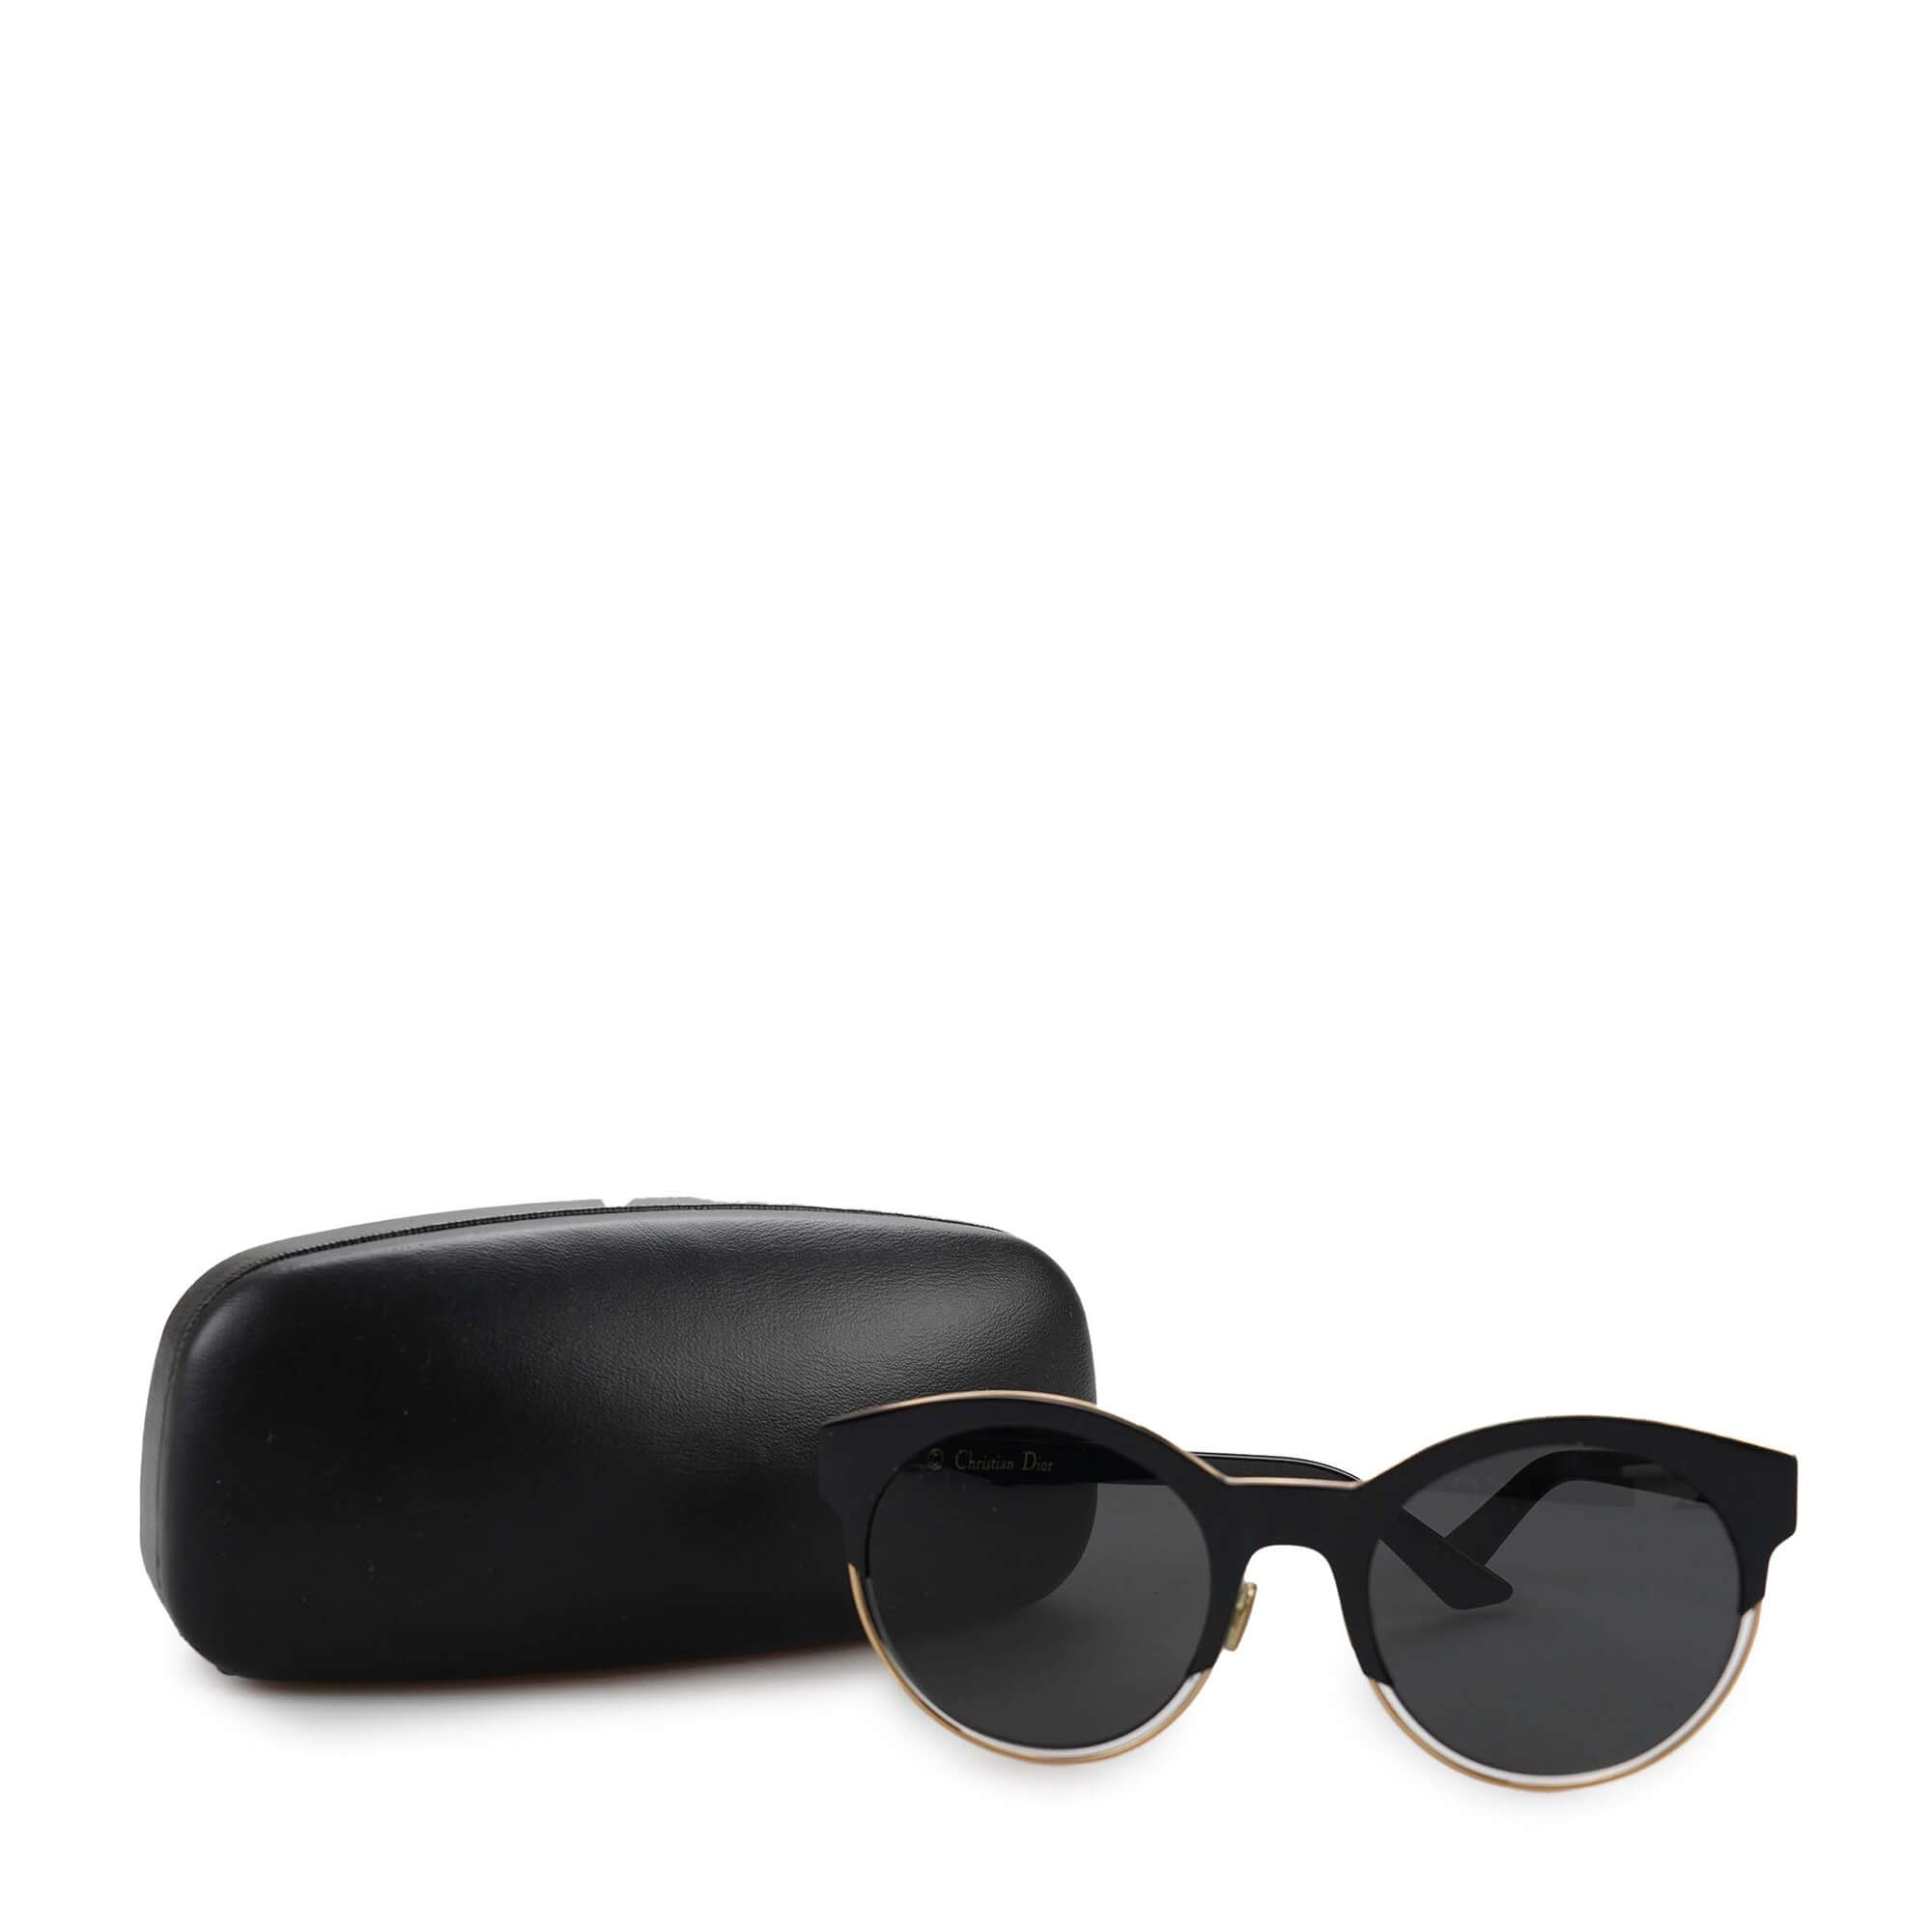 Christian Dior - Gold / Black Sideral 1 Sunglasses 